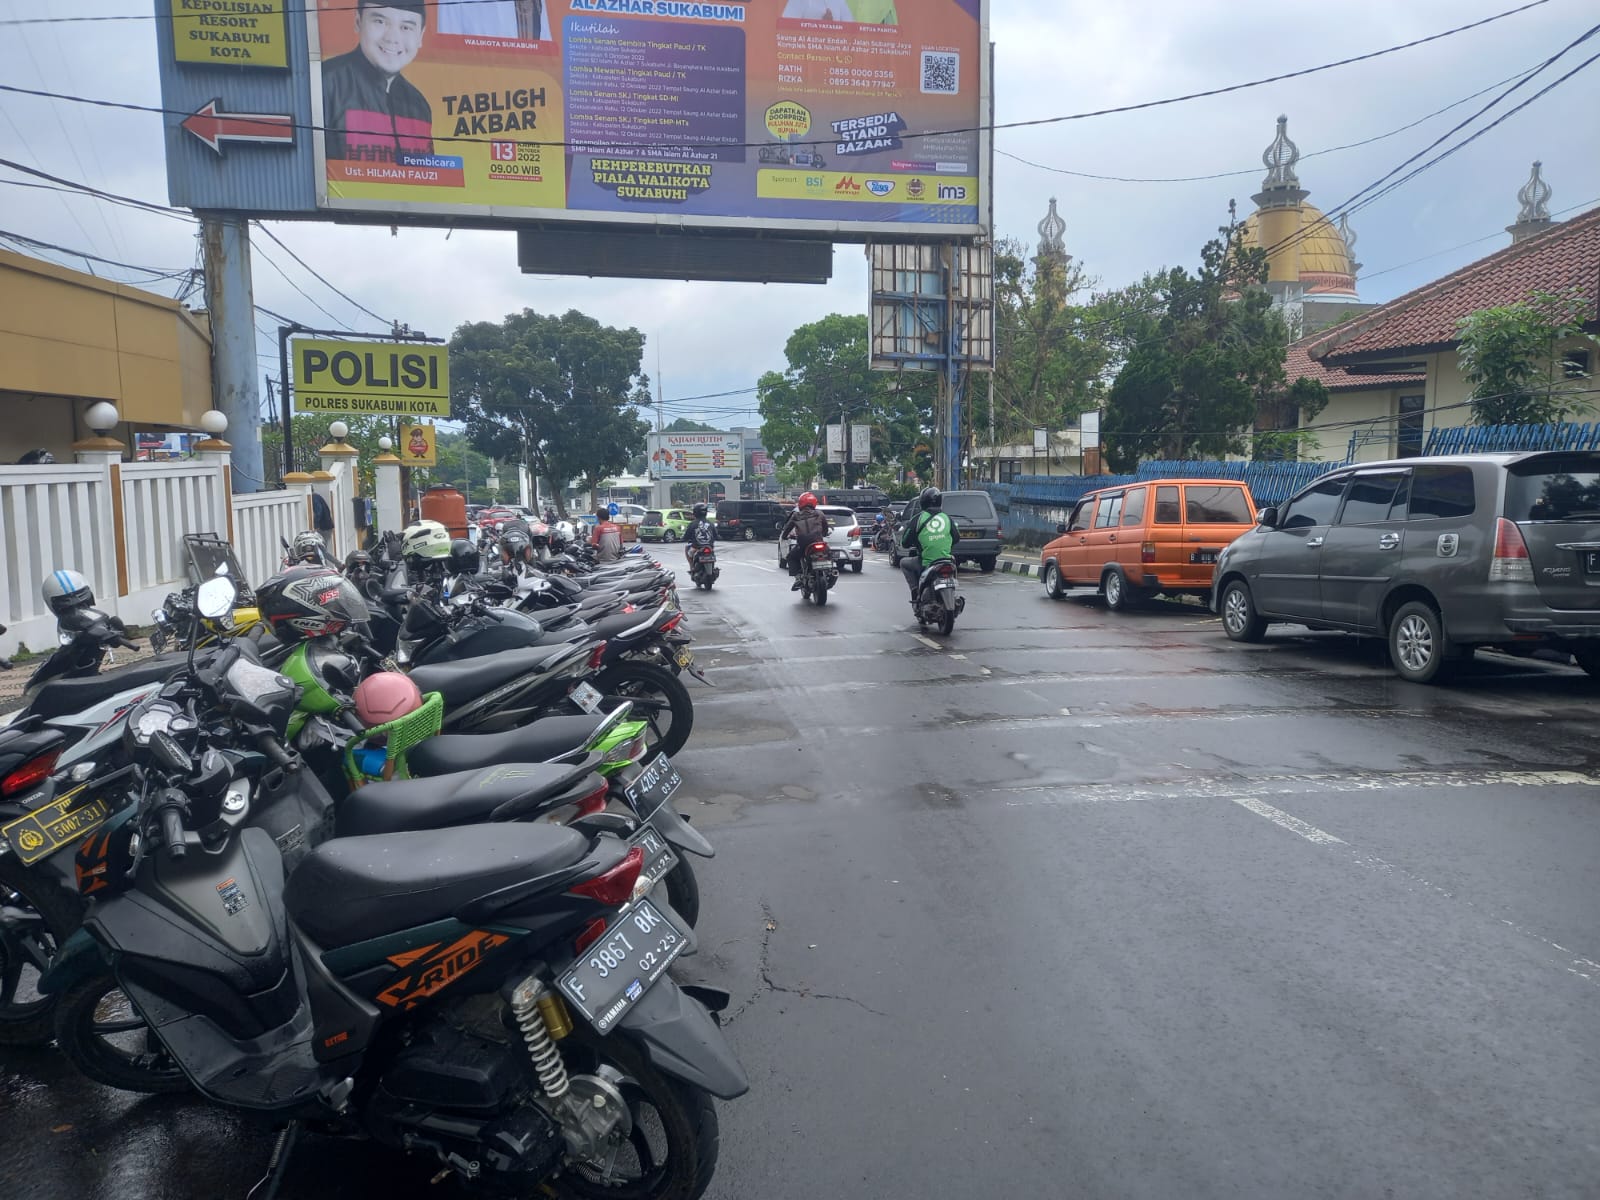 Kondisi parkiran kendaraan di sepanjang Jalan Perintis Kemerdekaan, Kecamatan Cikole